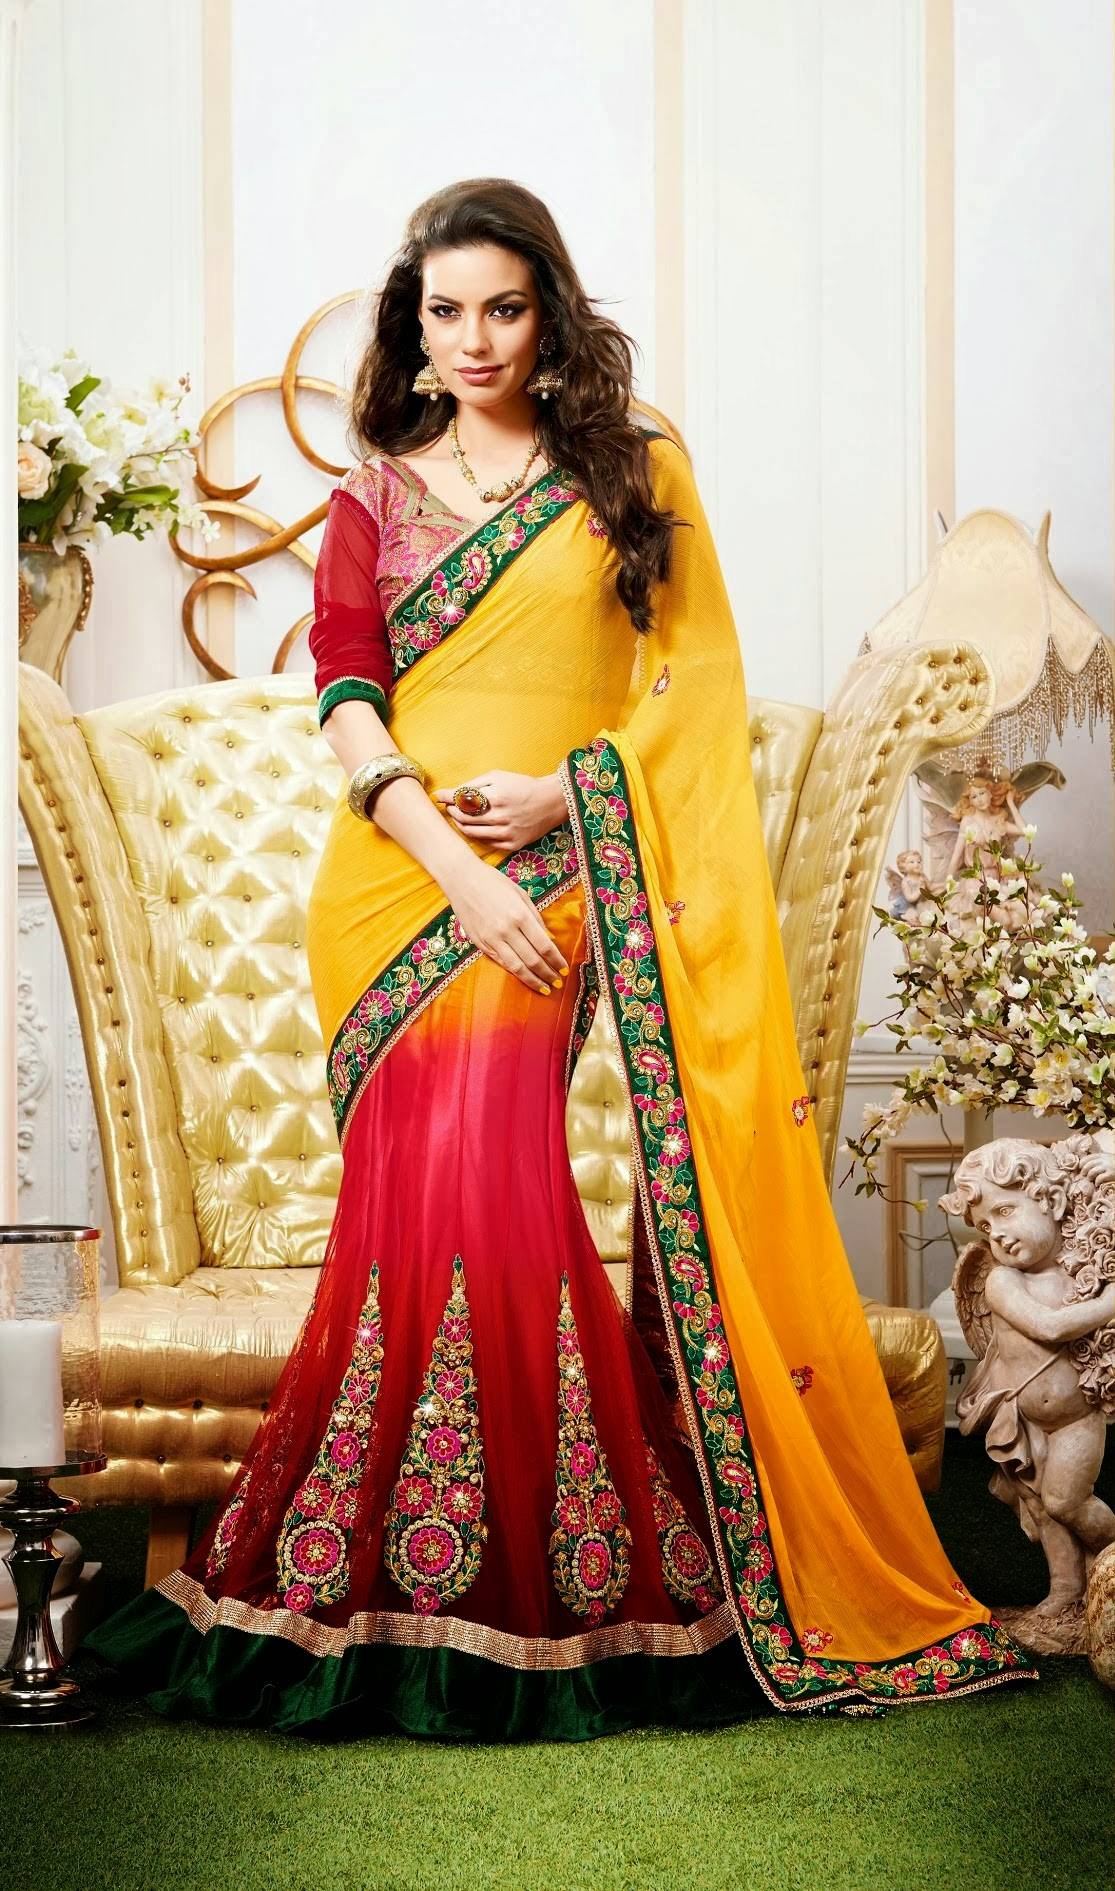 Fancy Pallu Saree For Engagement Day - XciteFun.net1115 x 1891